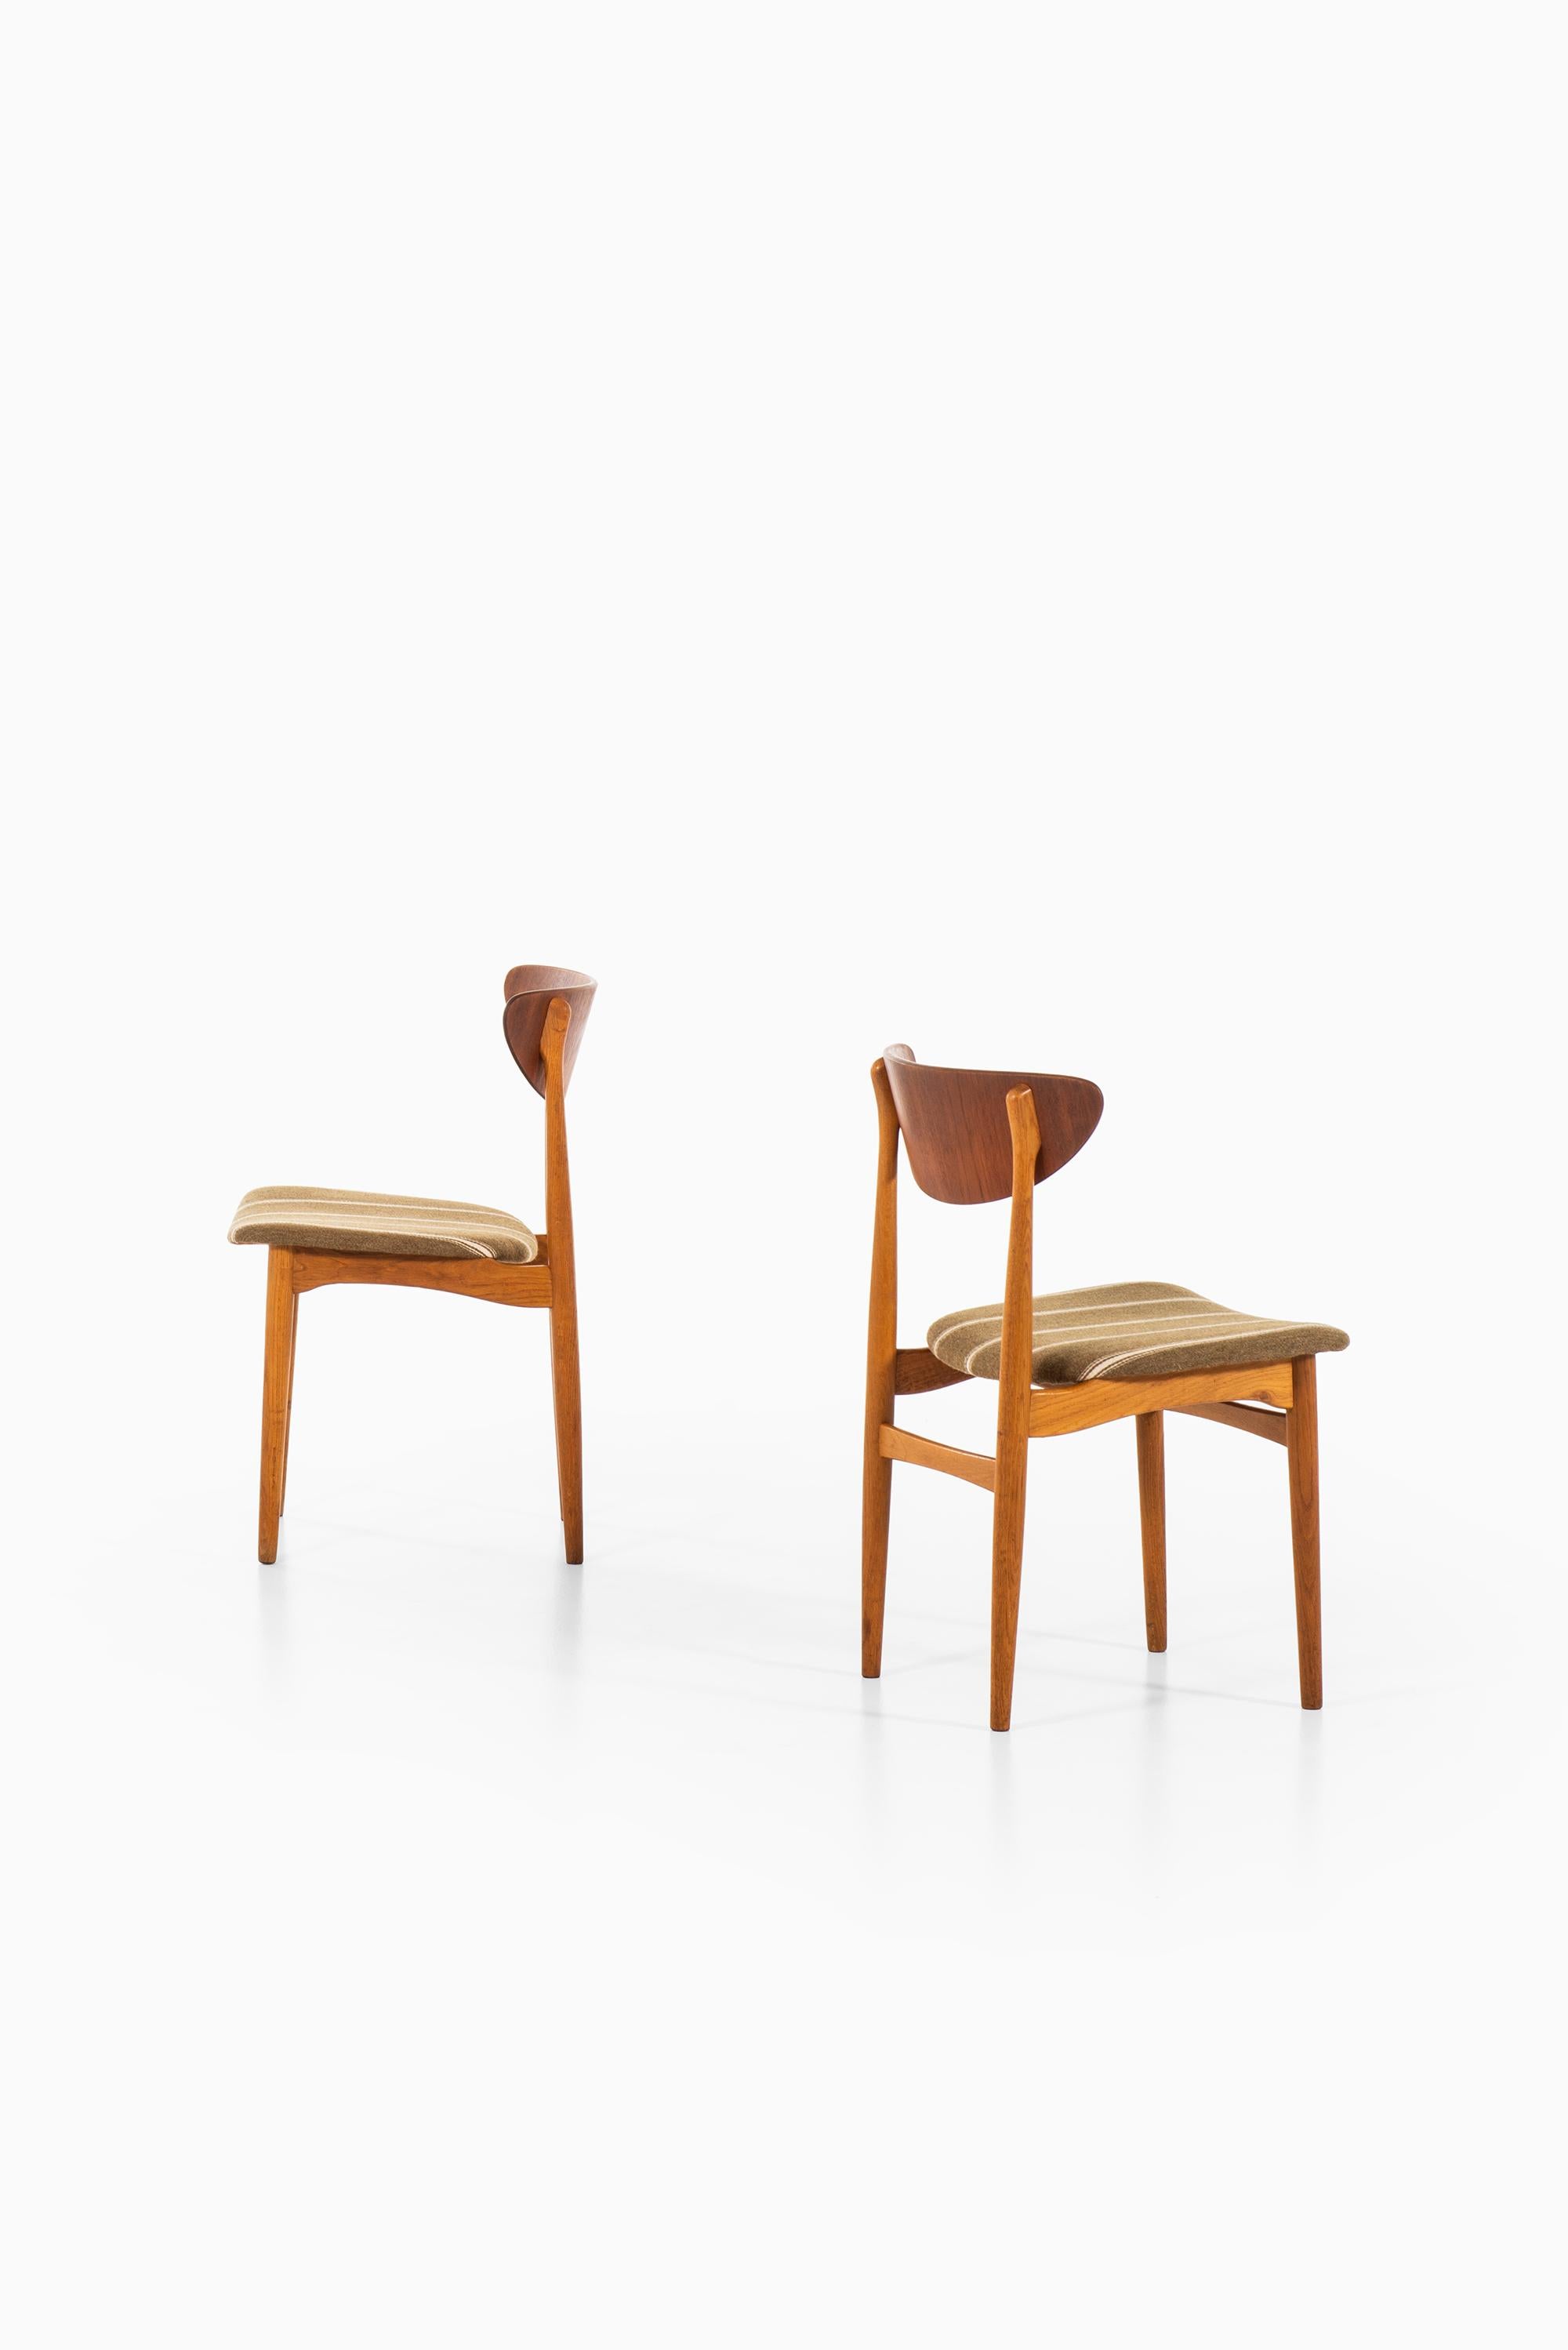 Wool Henning Kjærnulf Dining Chairs Produced by Sorø Stolefabrik in Denmark